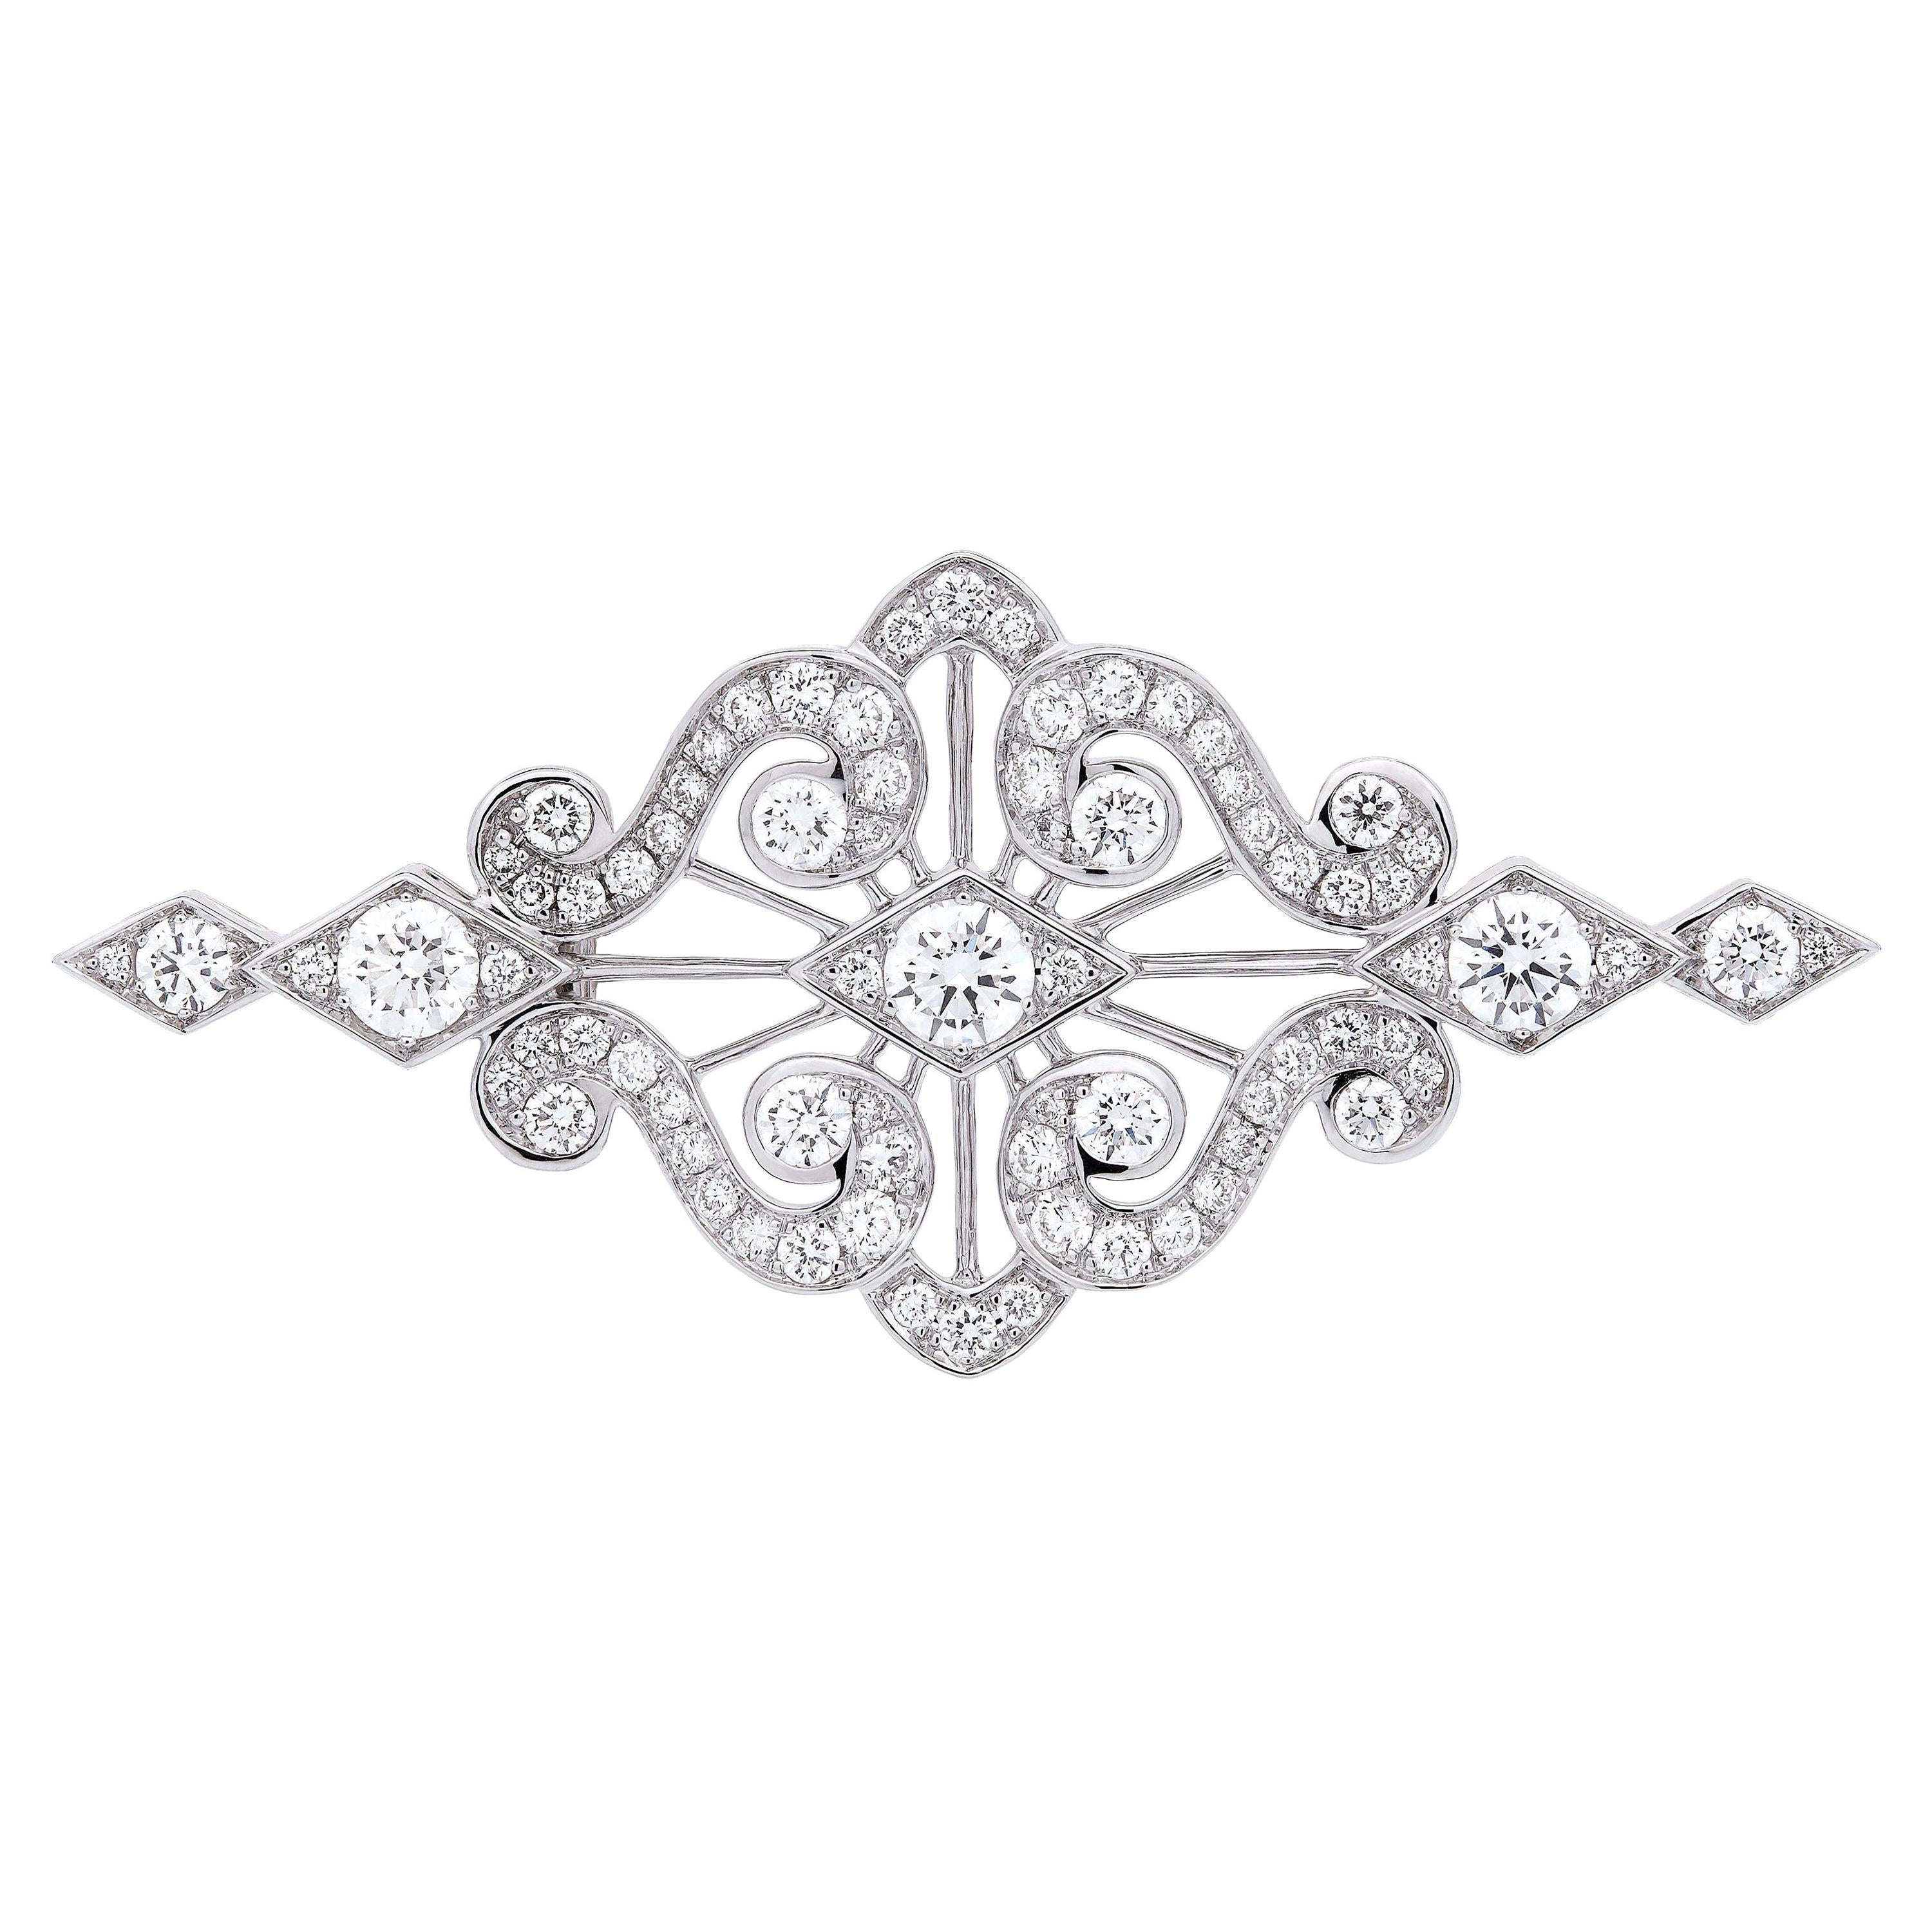 Garrard 'Albemarle' 18 Karat White Gold White Diamond Brooch For Sale